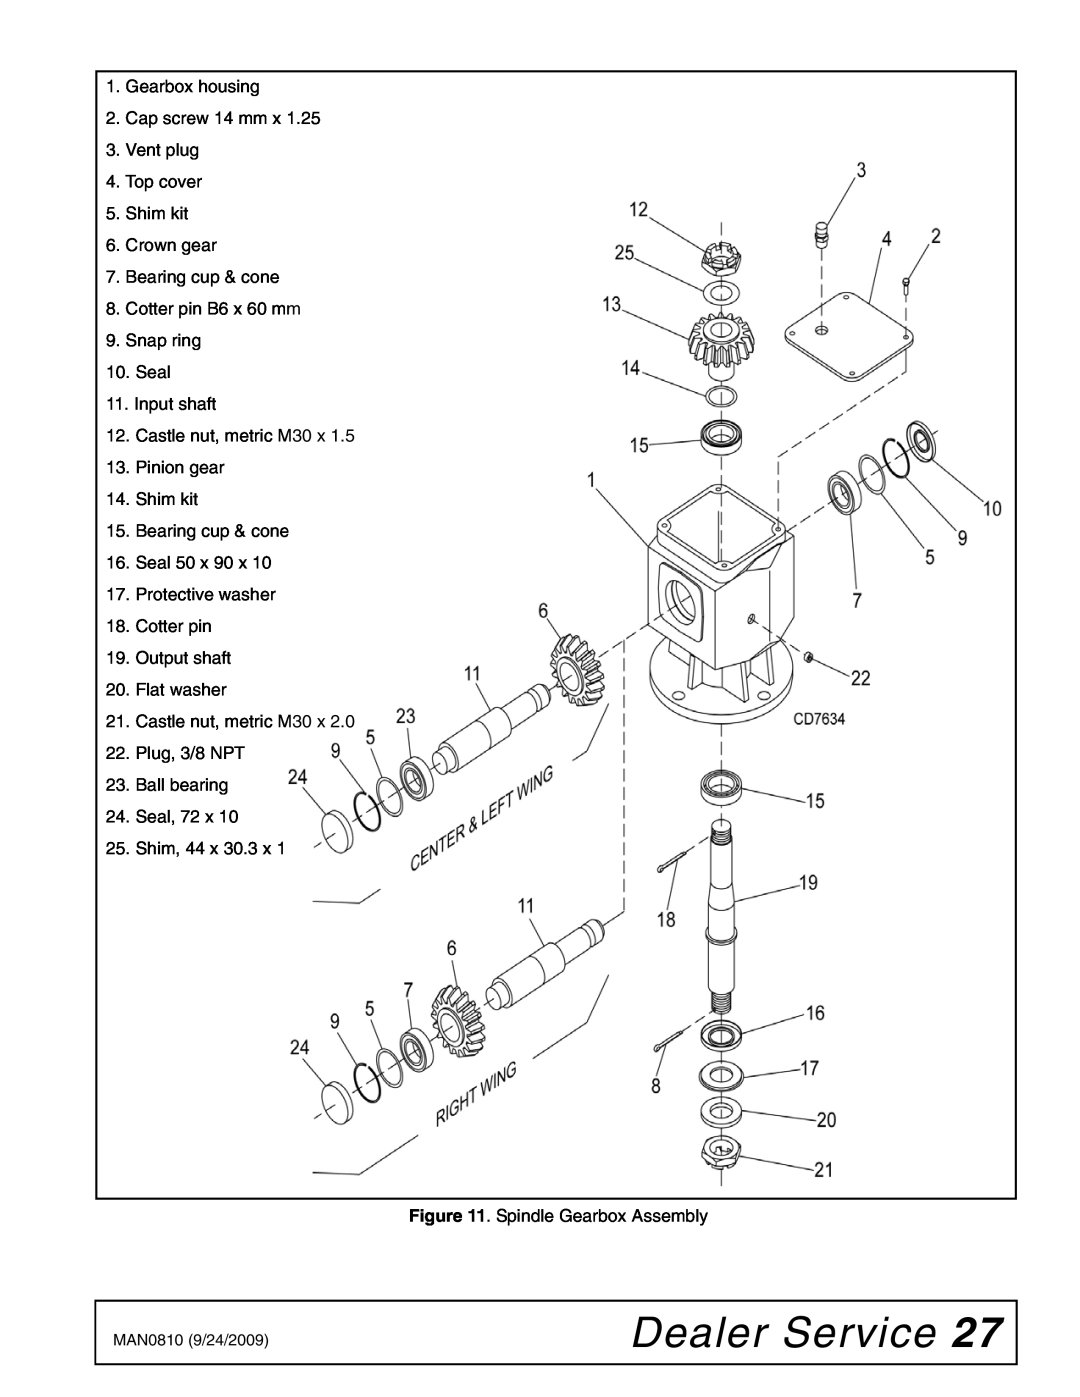 Woods Equipment BW15LH manual Dealer Service, Gearbox housing 2.Cap screw 14 mm x 3.Vent plug 